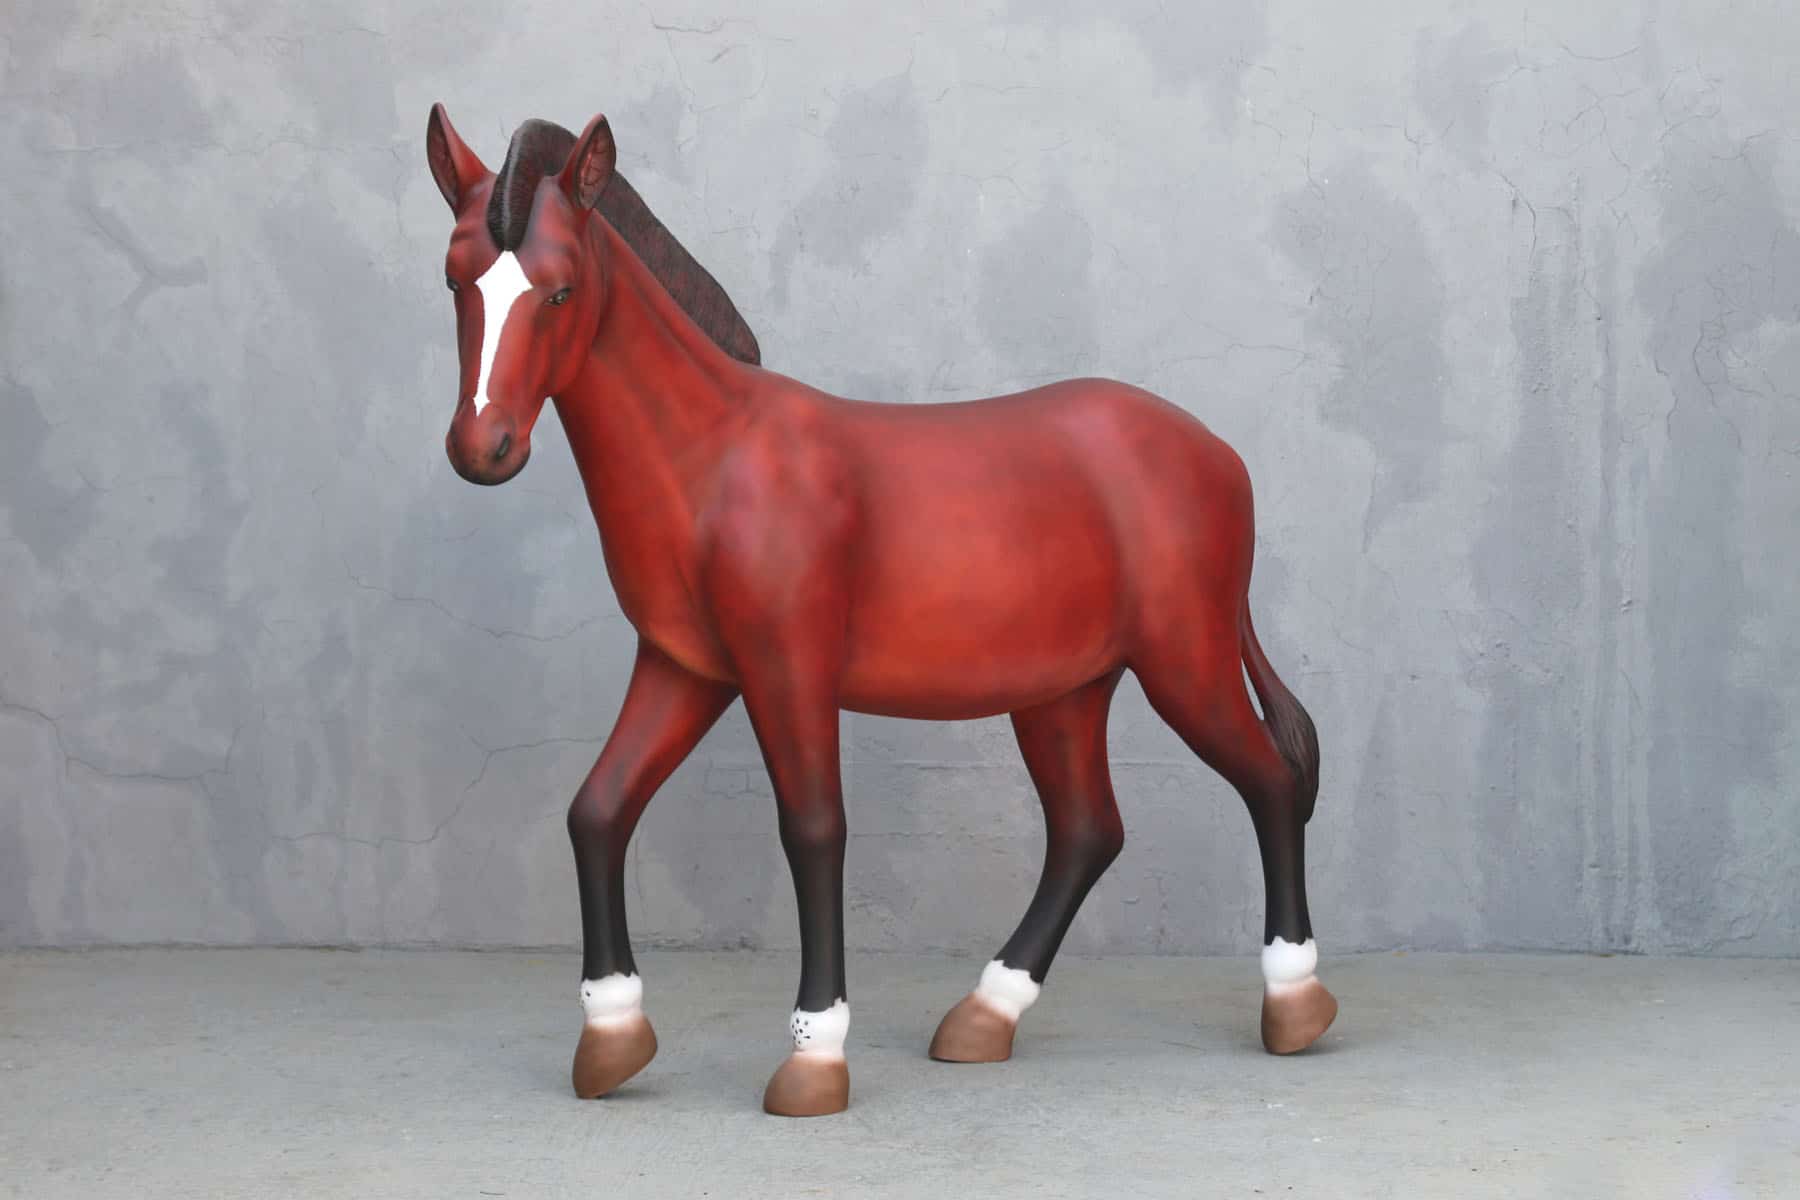 פסל של סוס ערבי